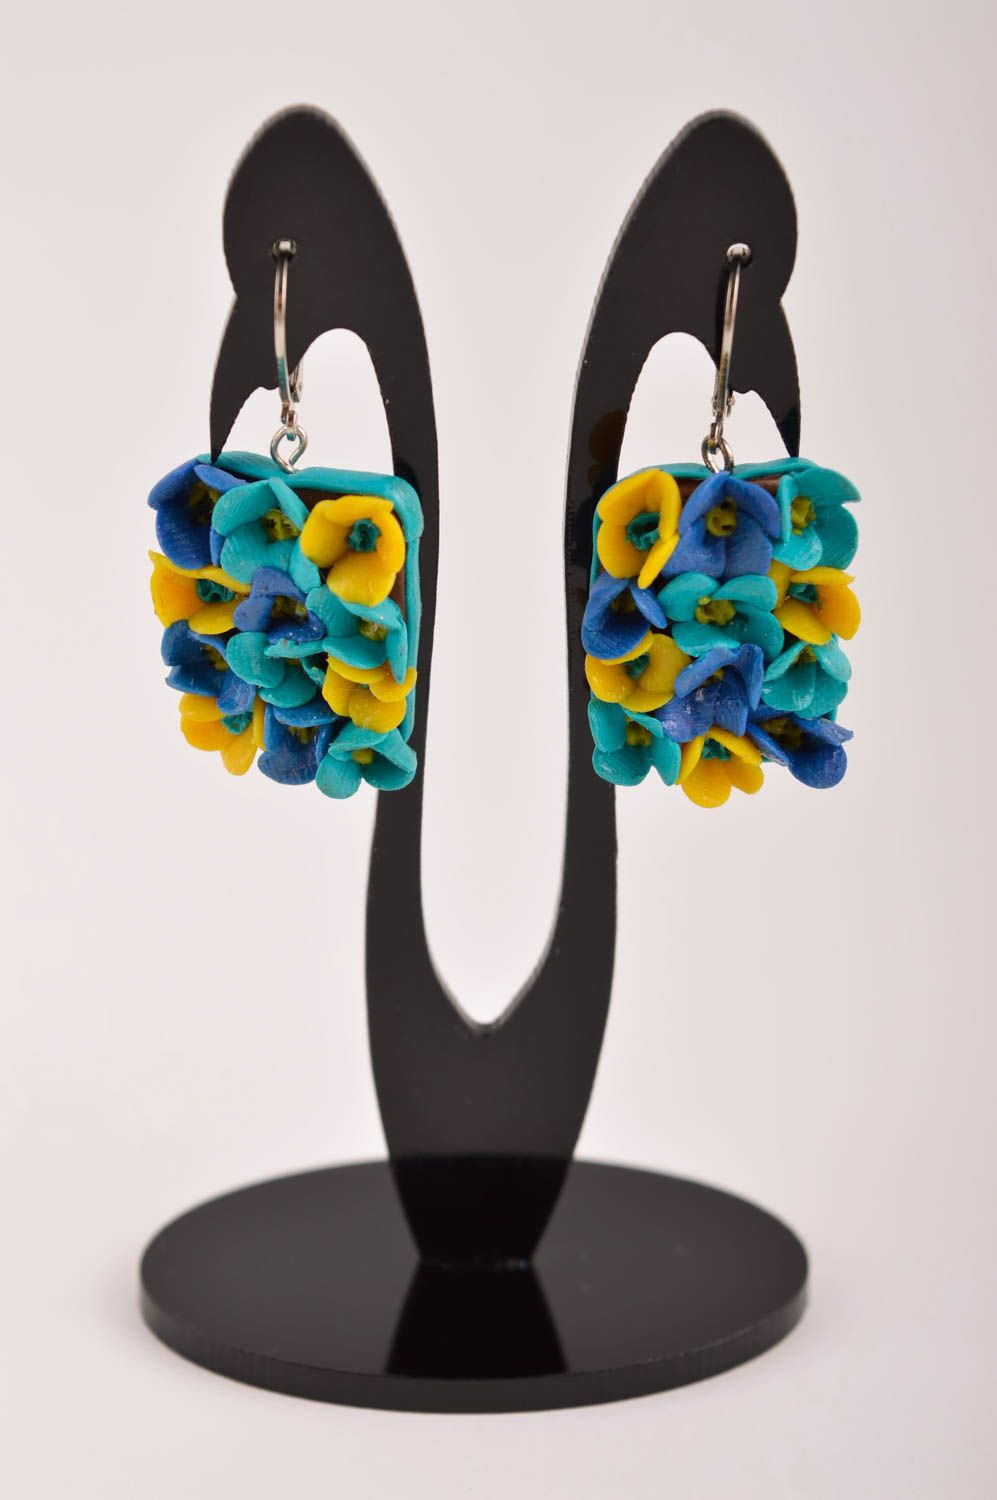 Handmade earrings designer clay earrings flowers earrings for women gift ideas photo 2